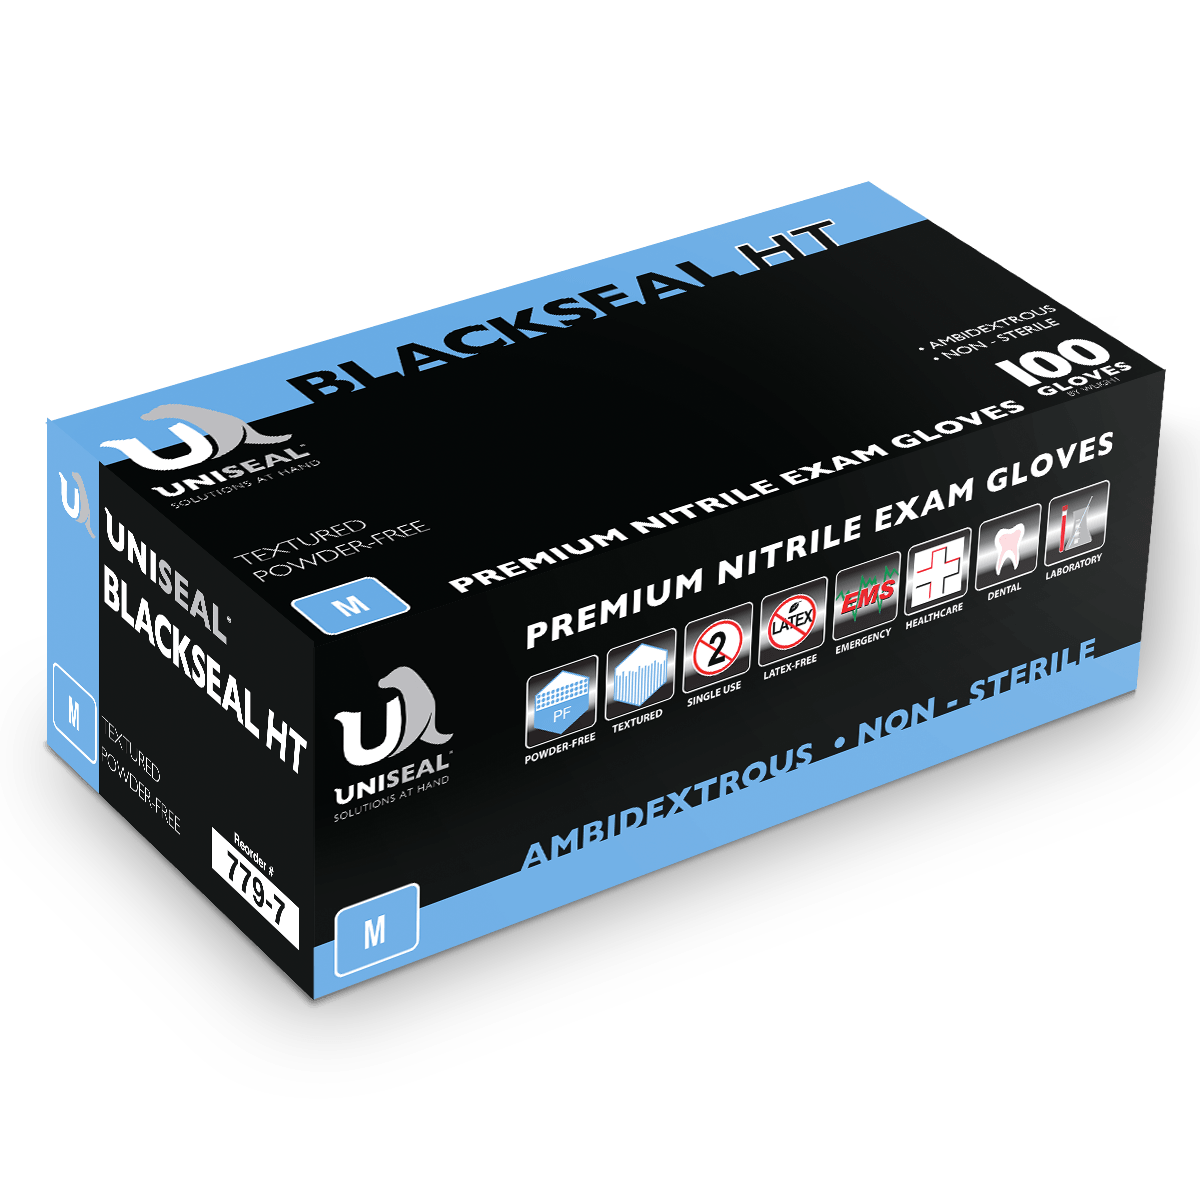 100 pair Medium UniSeal Black Seal Premium Nitrile Powder Free Textured Exam Gloves 